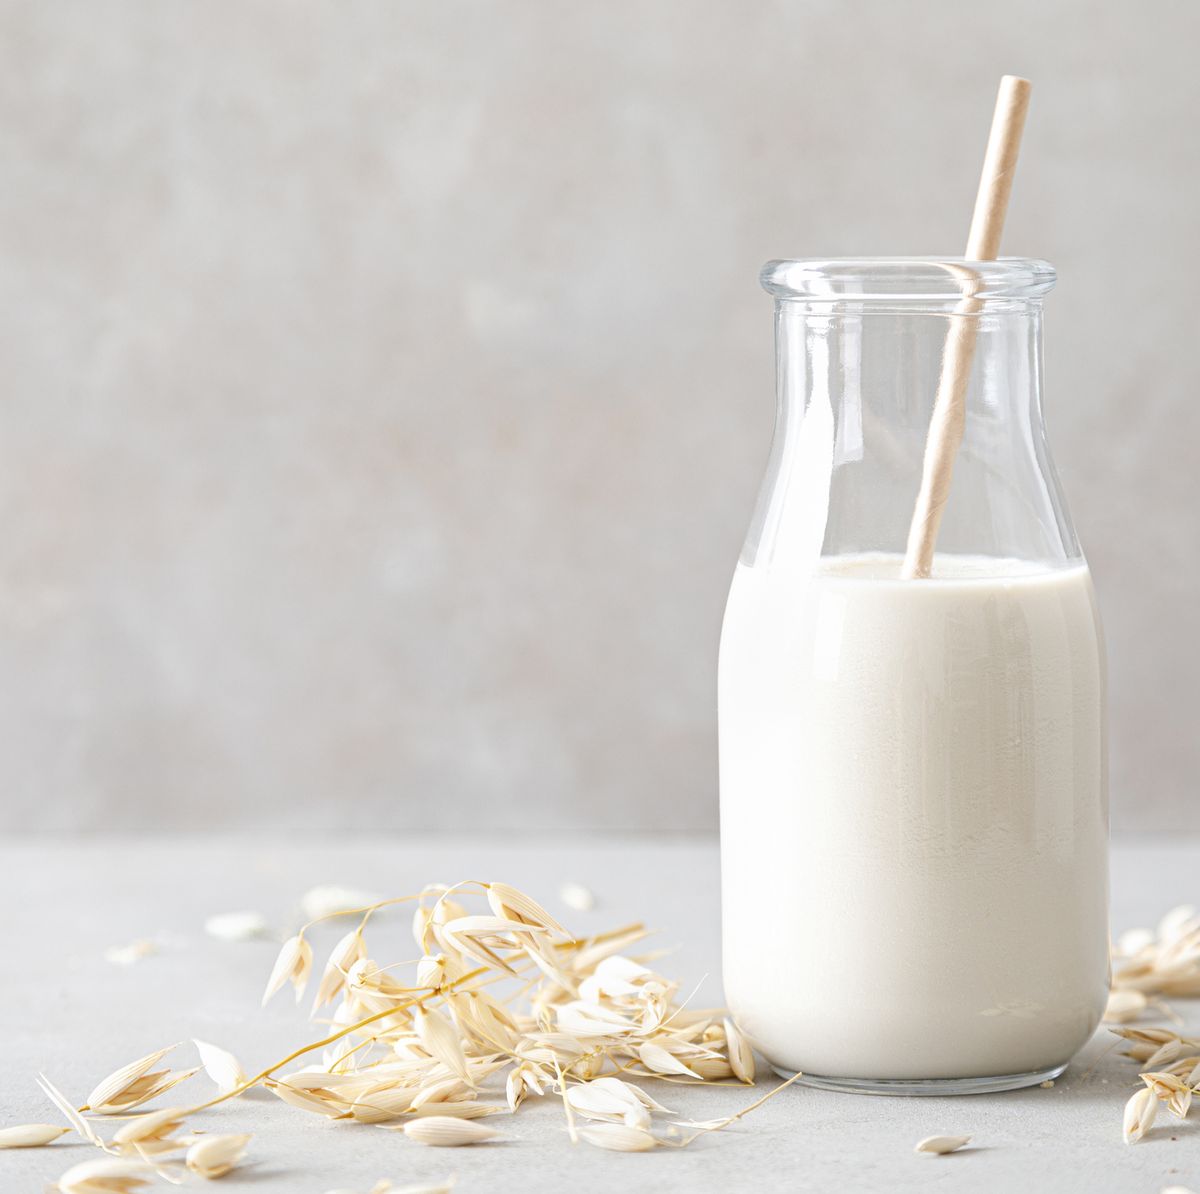 Frothed Milk - Delicious Meets Healthy